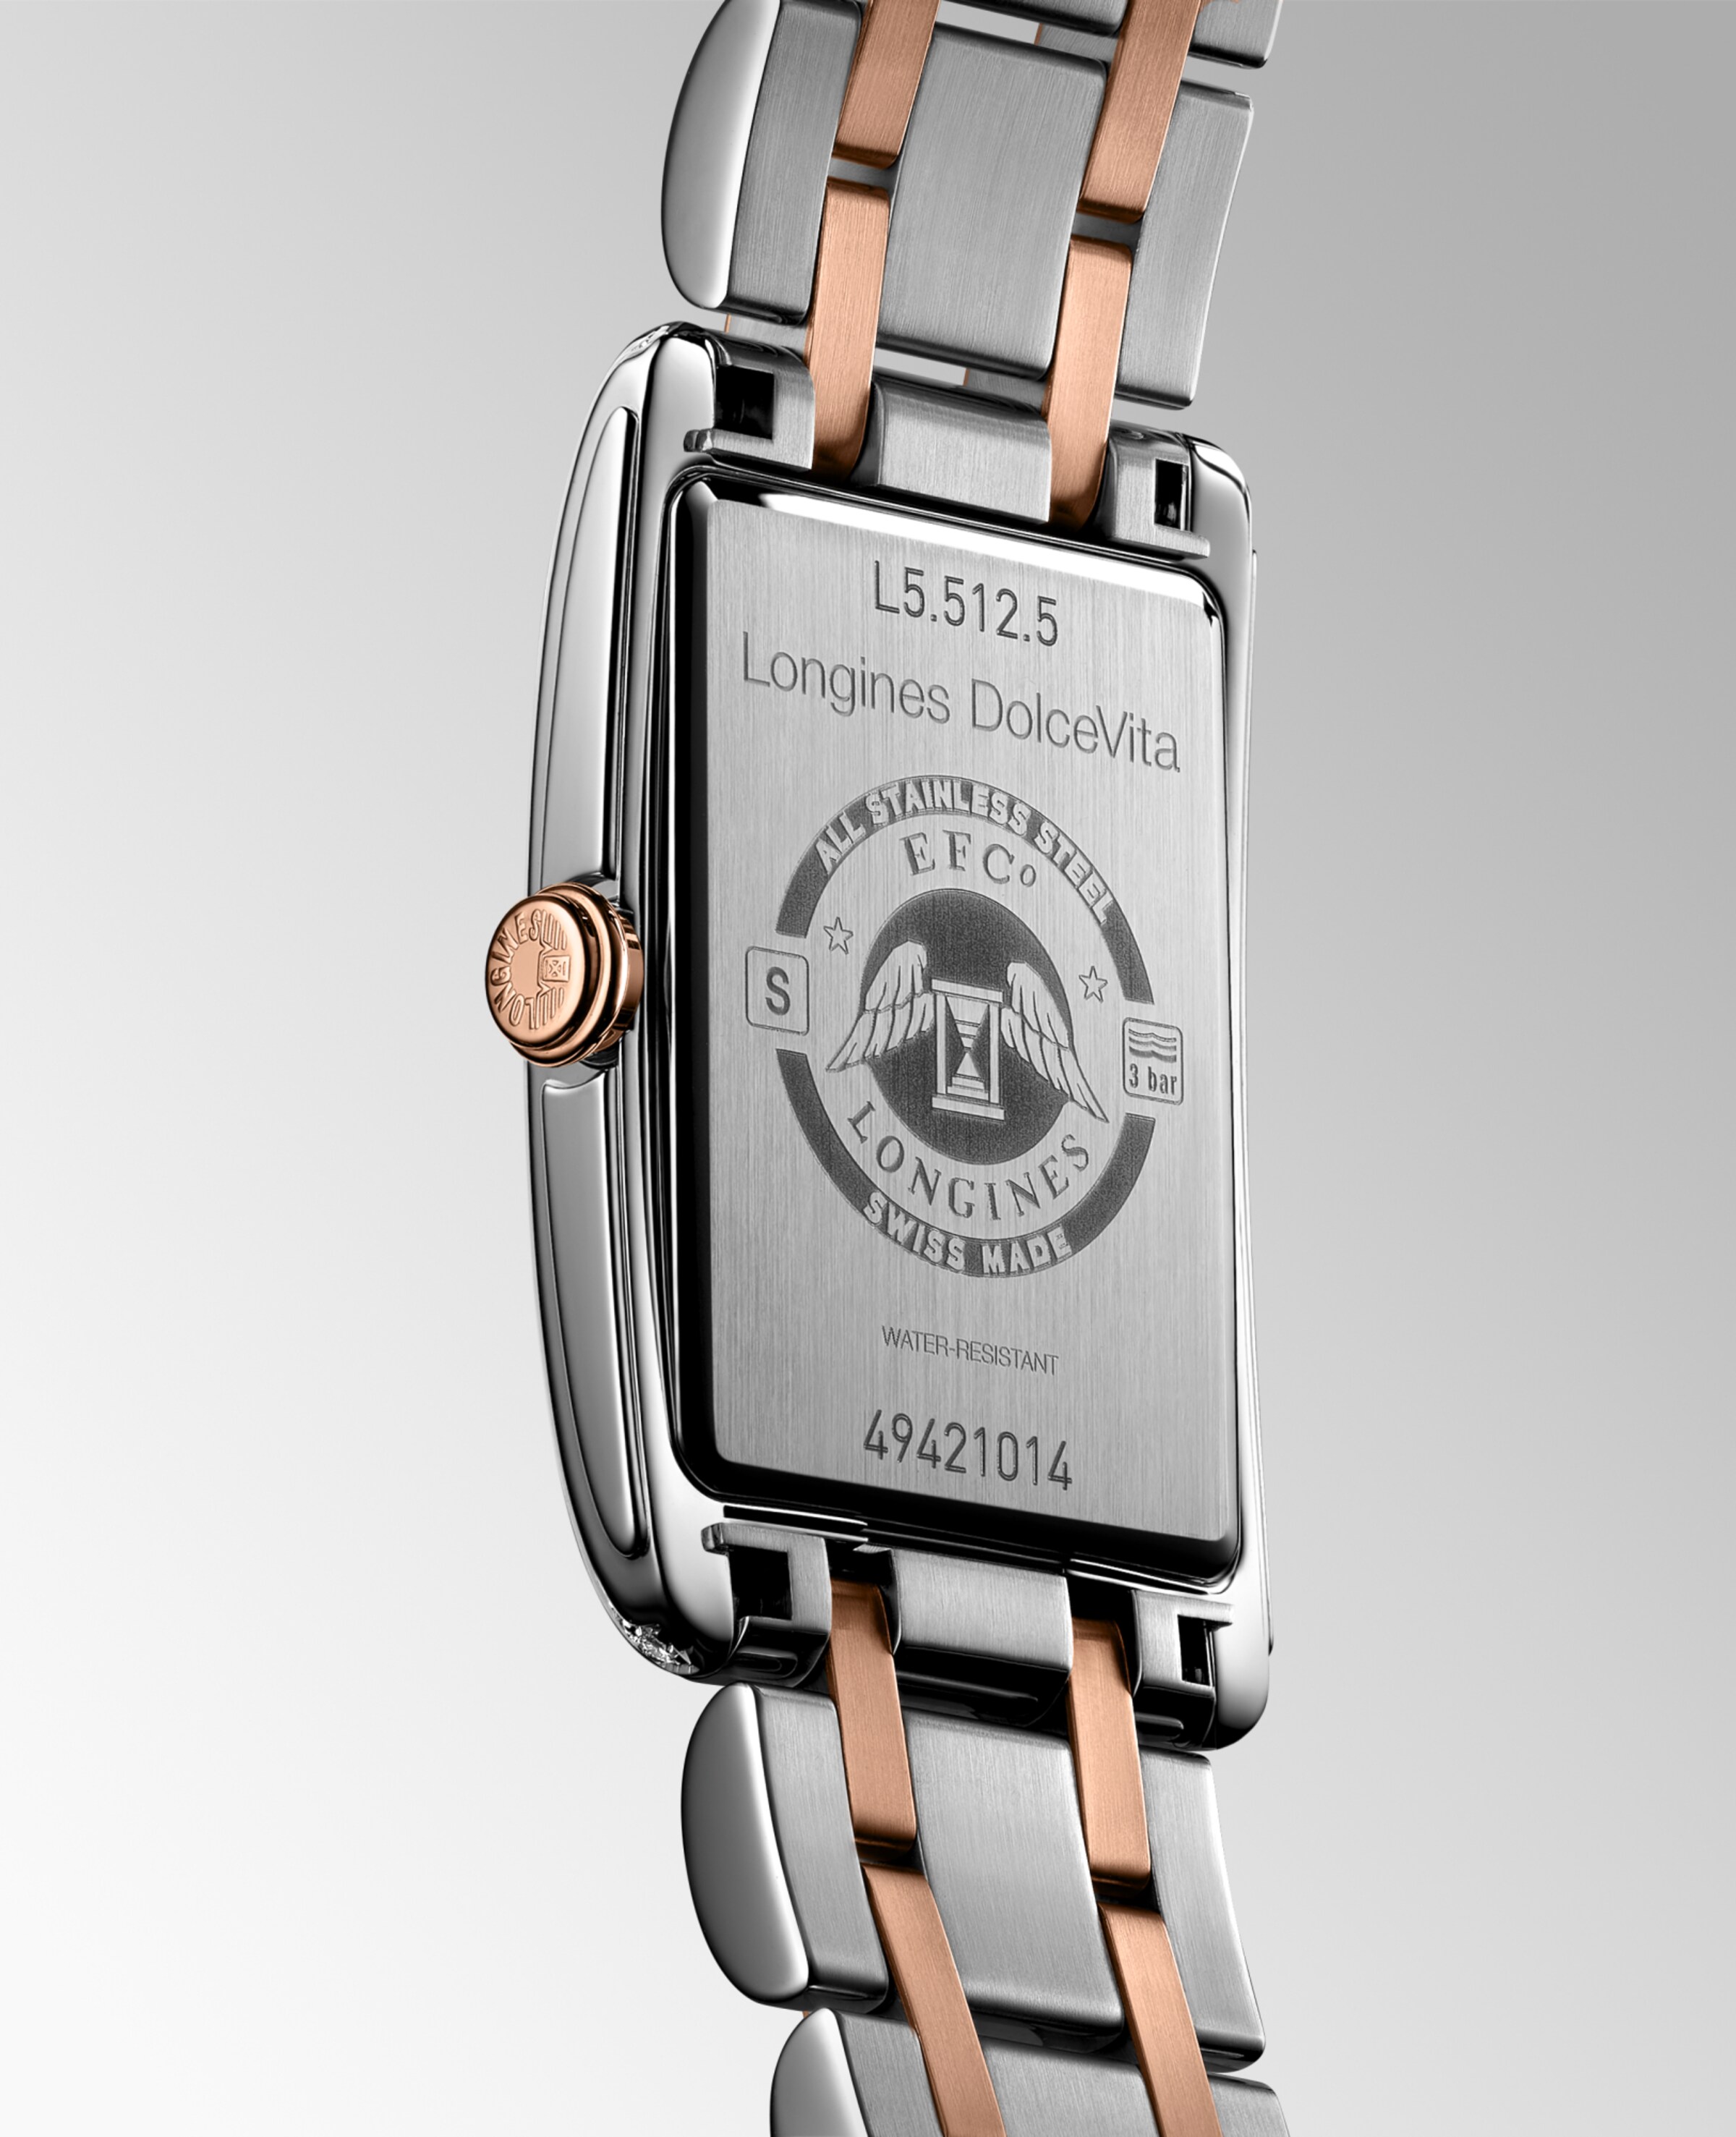 Longines DOLCEVITA Quartz Stainless steel with 18 karat pink gold crown Watch - L5.512.5.79.7